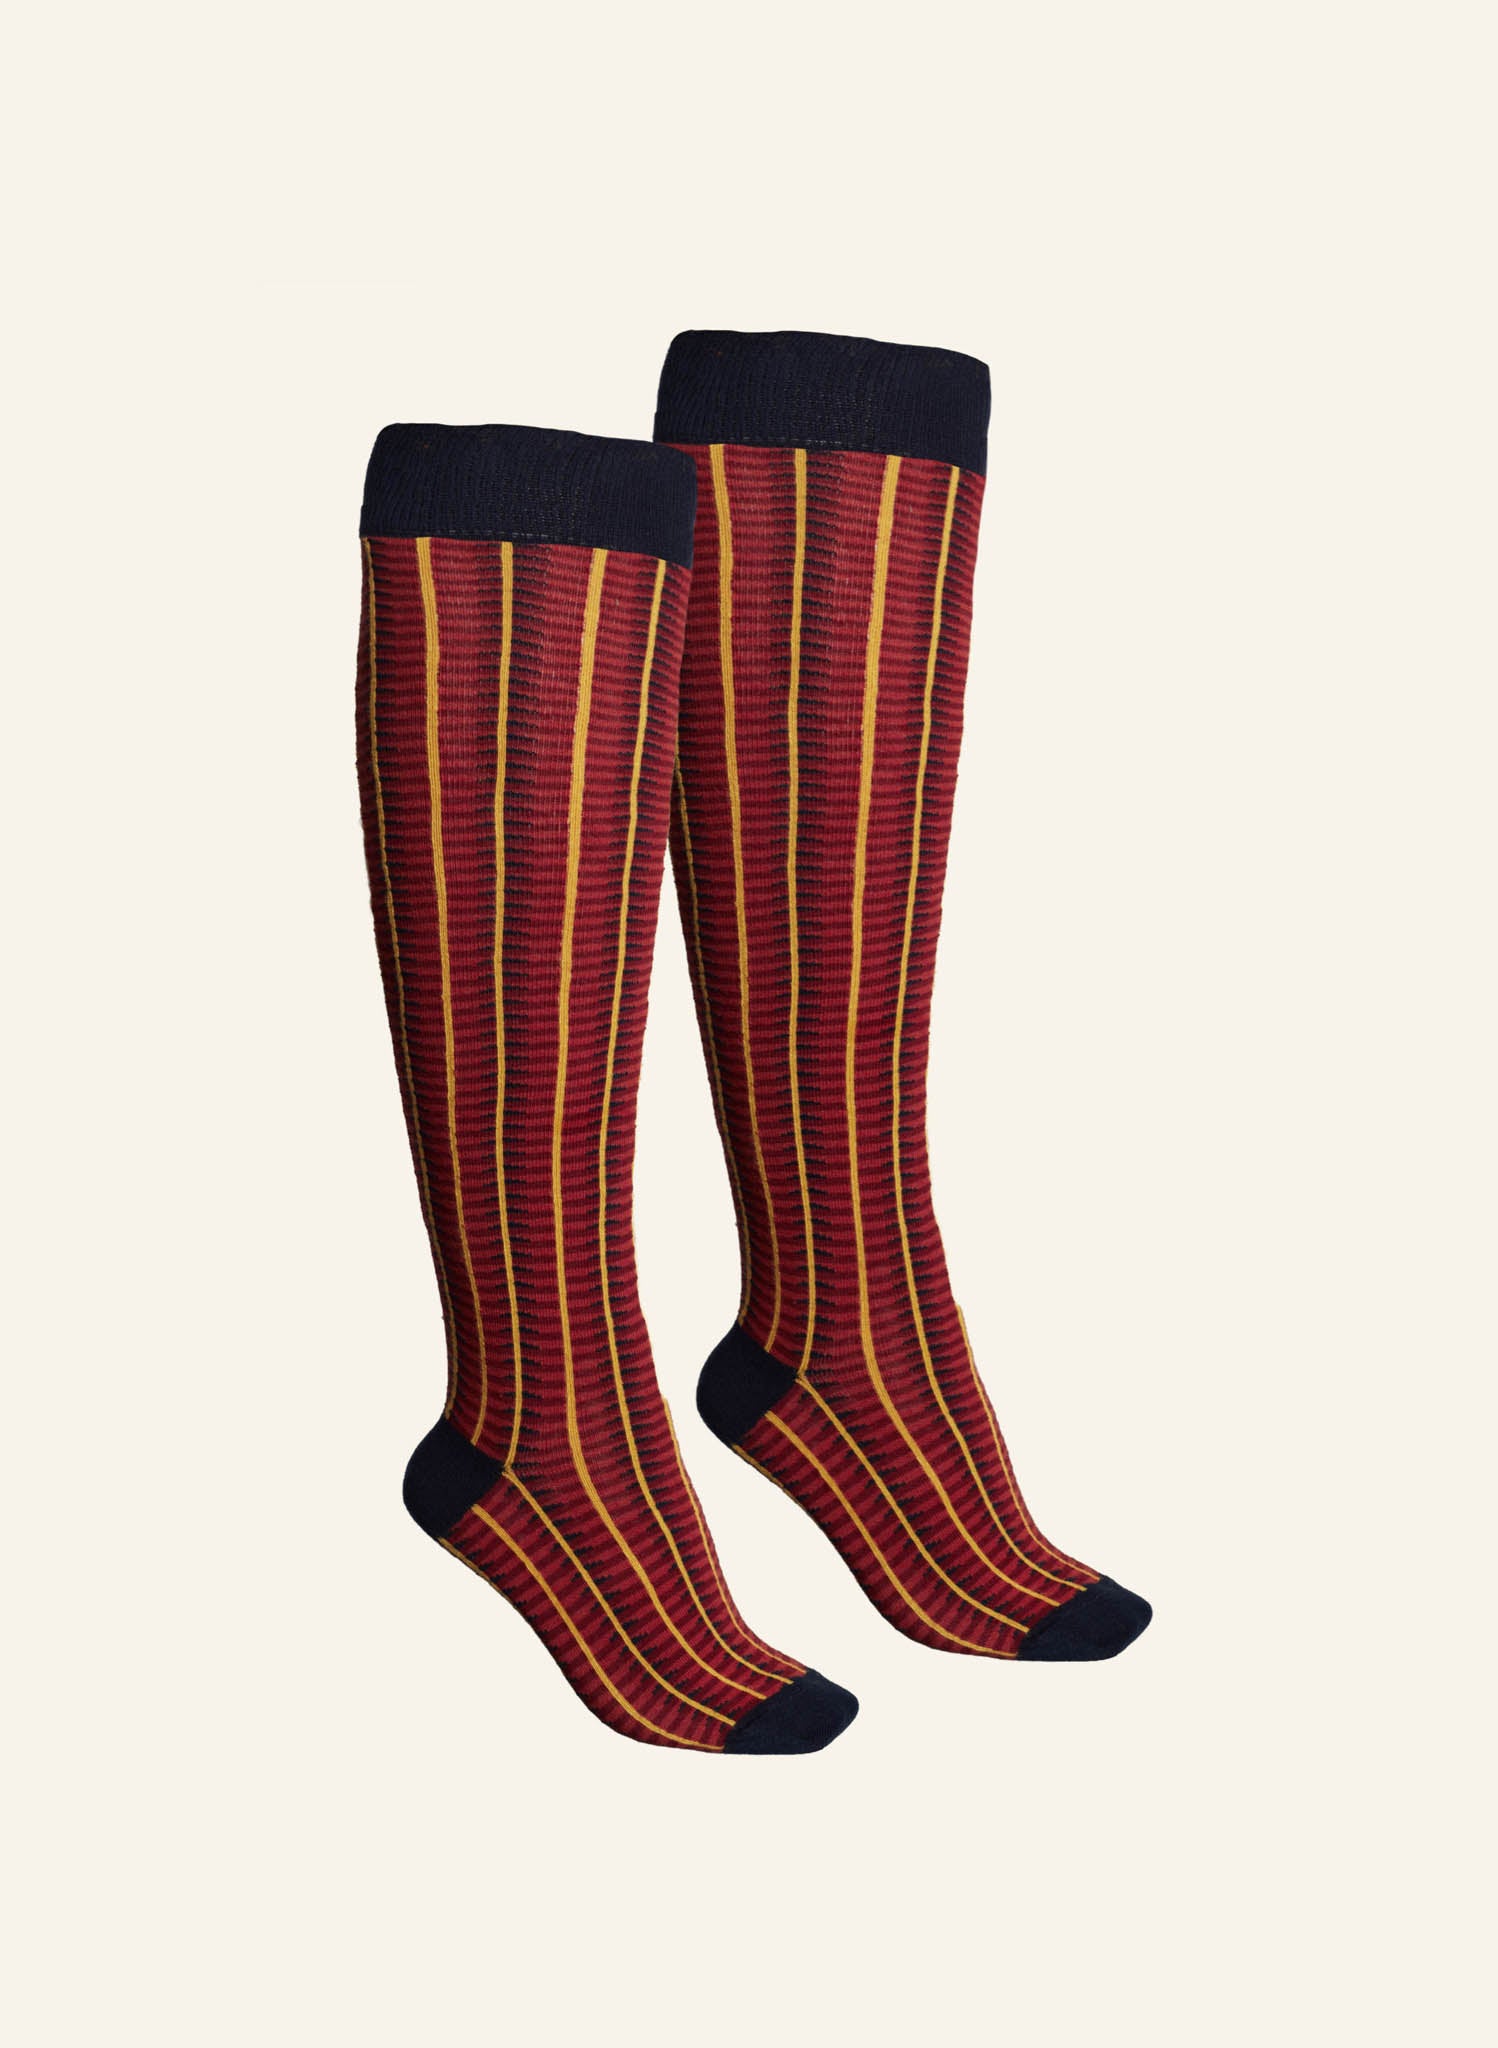 Knee High Socks - Crimson Barbican